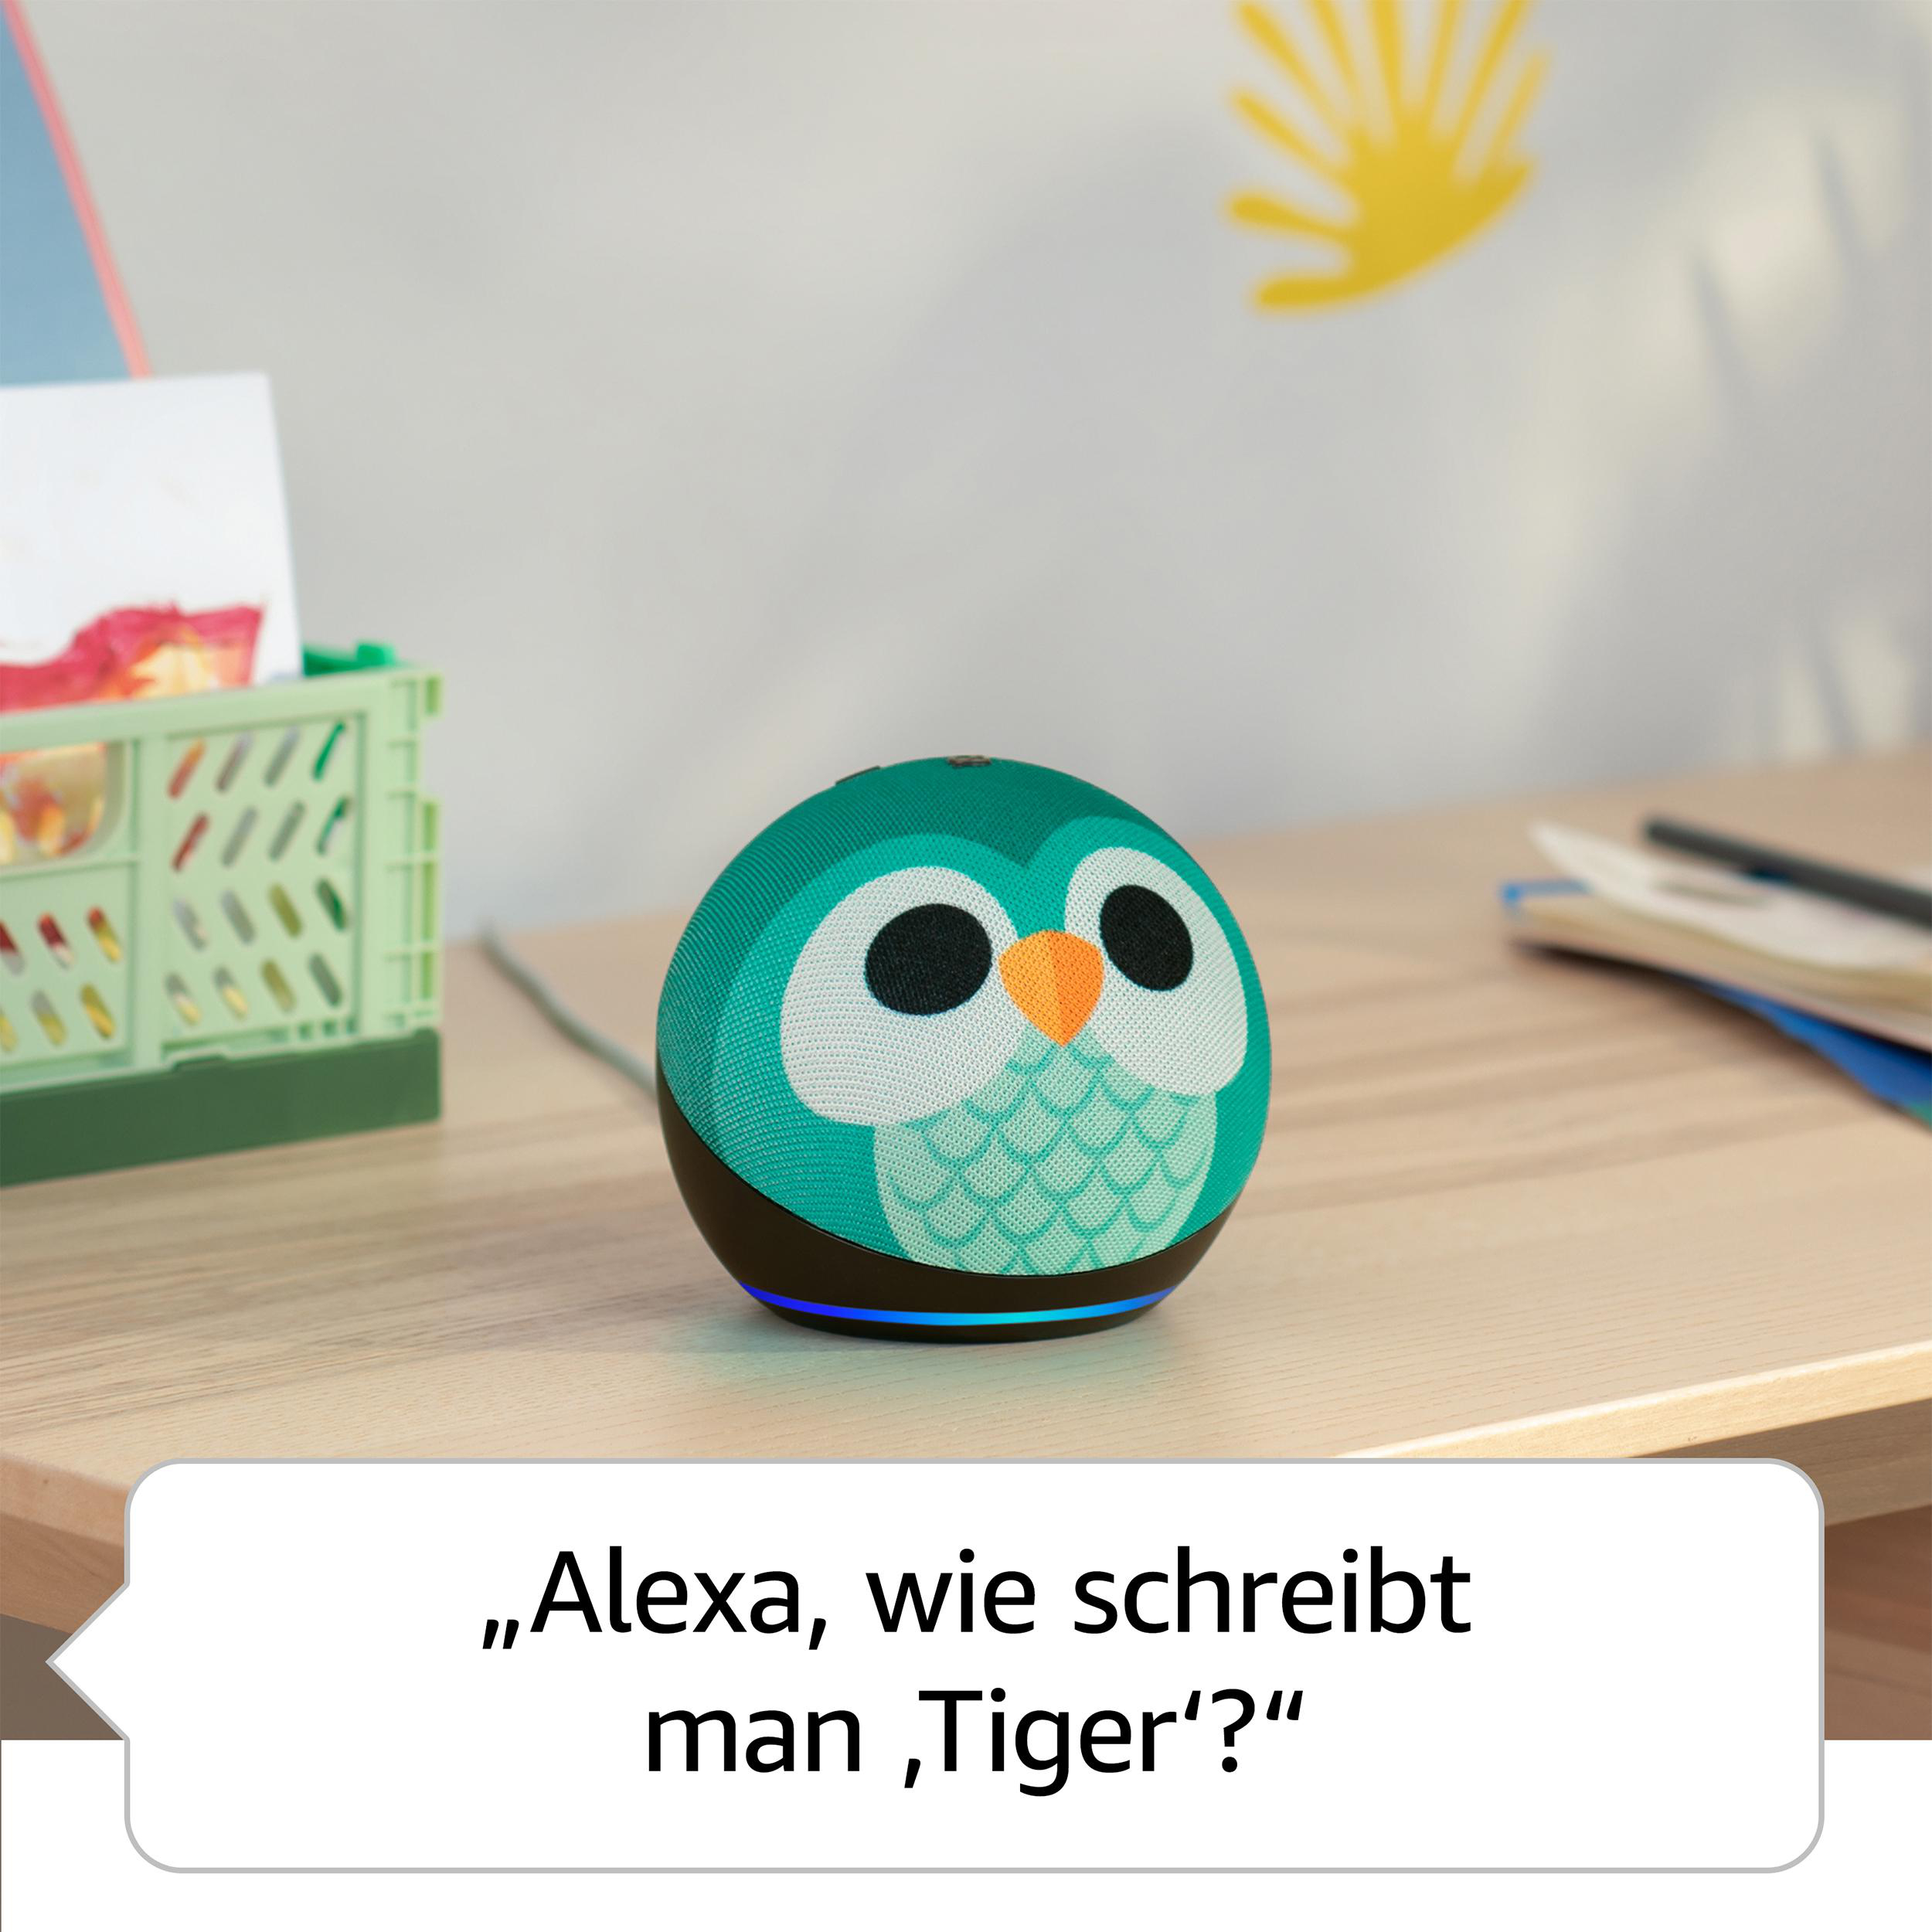 AMAZON Smart mit (5. Eulen Speaker, Echo Dot Kids, 2022) Design Alexa, Generation,